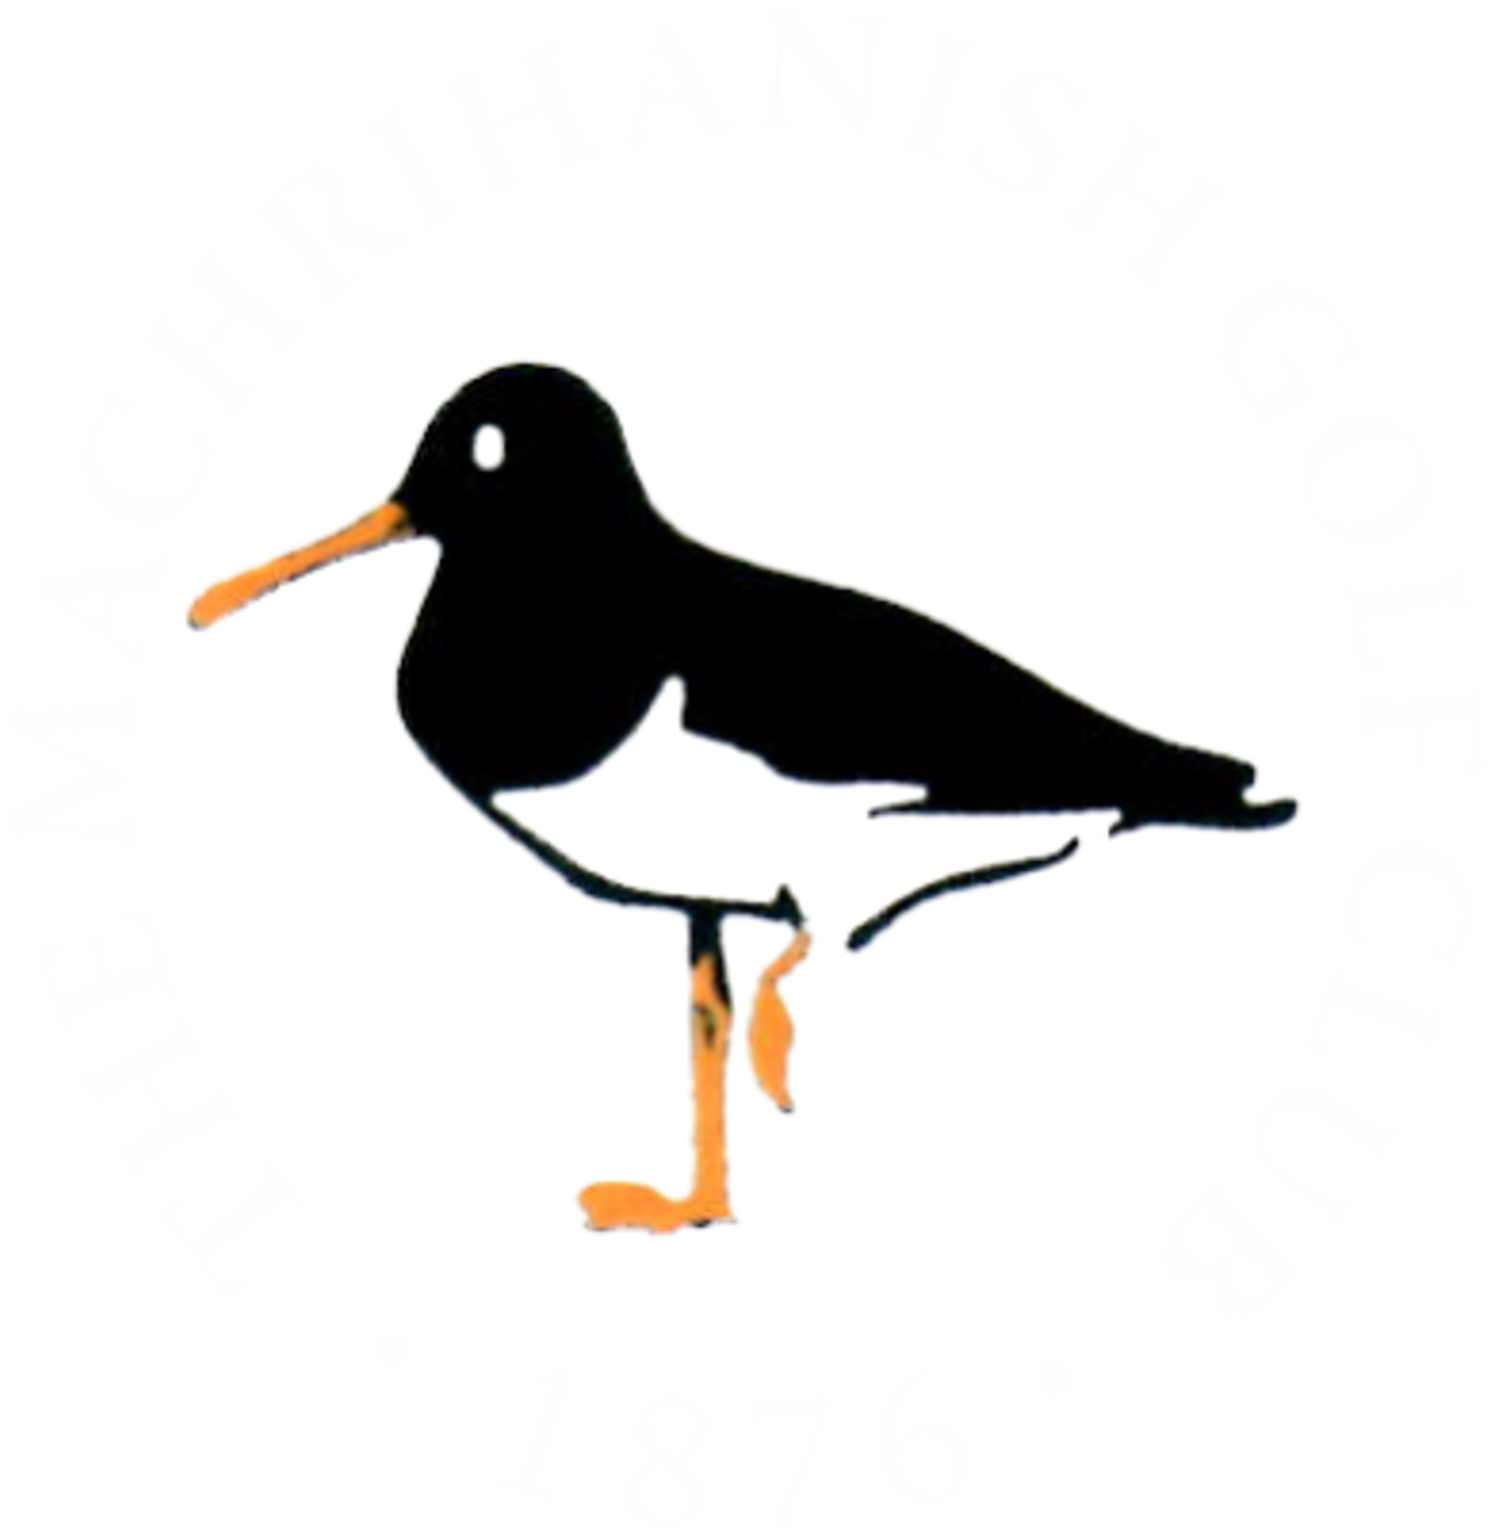 The Machrihanish Golf Club